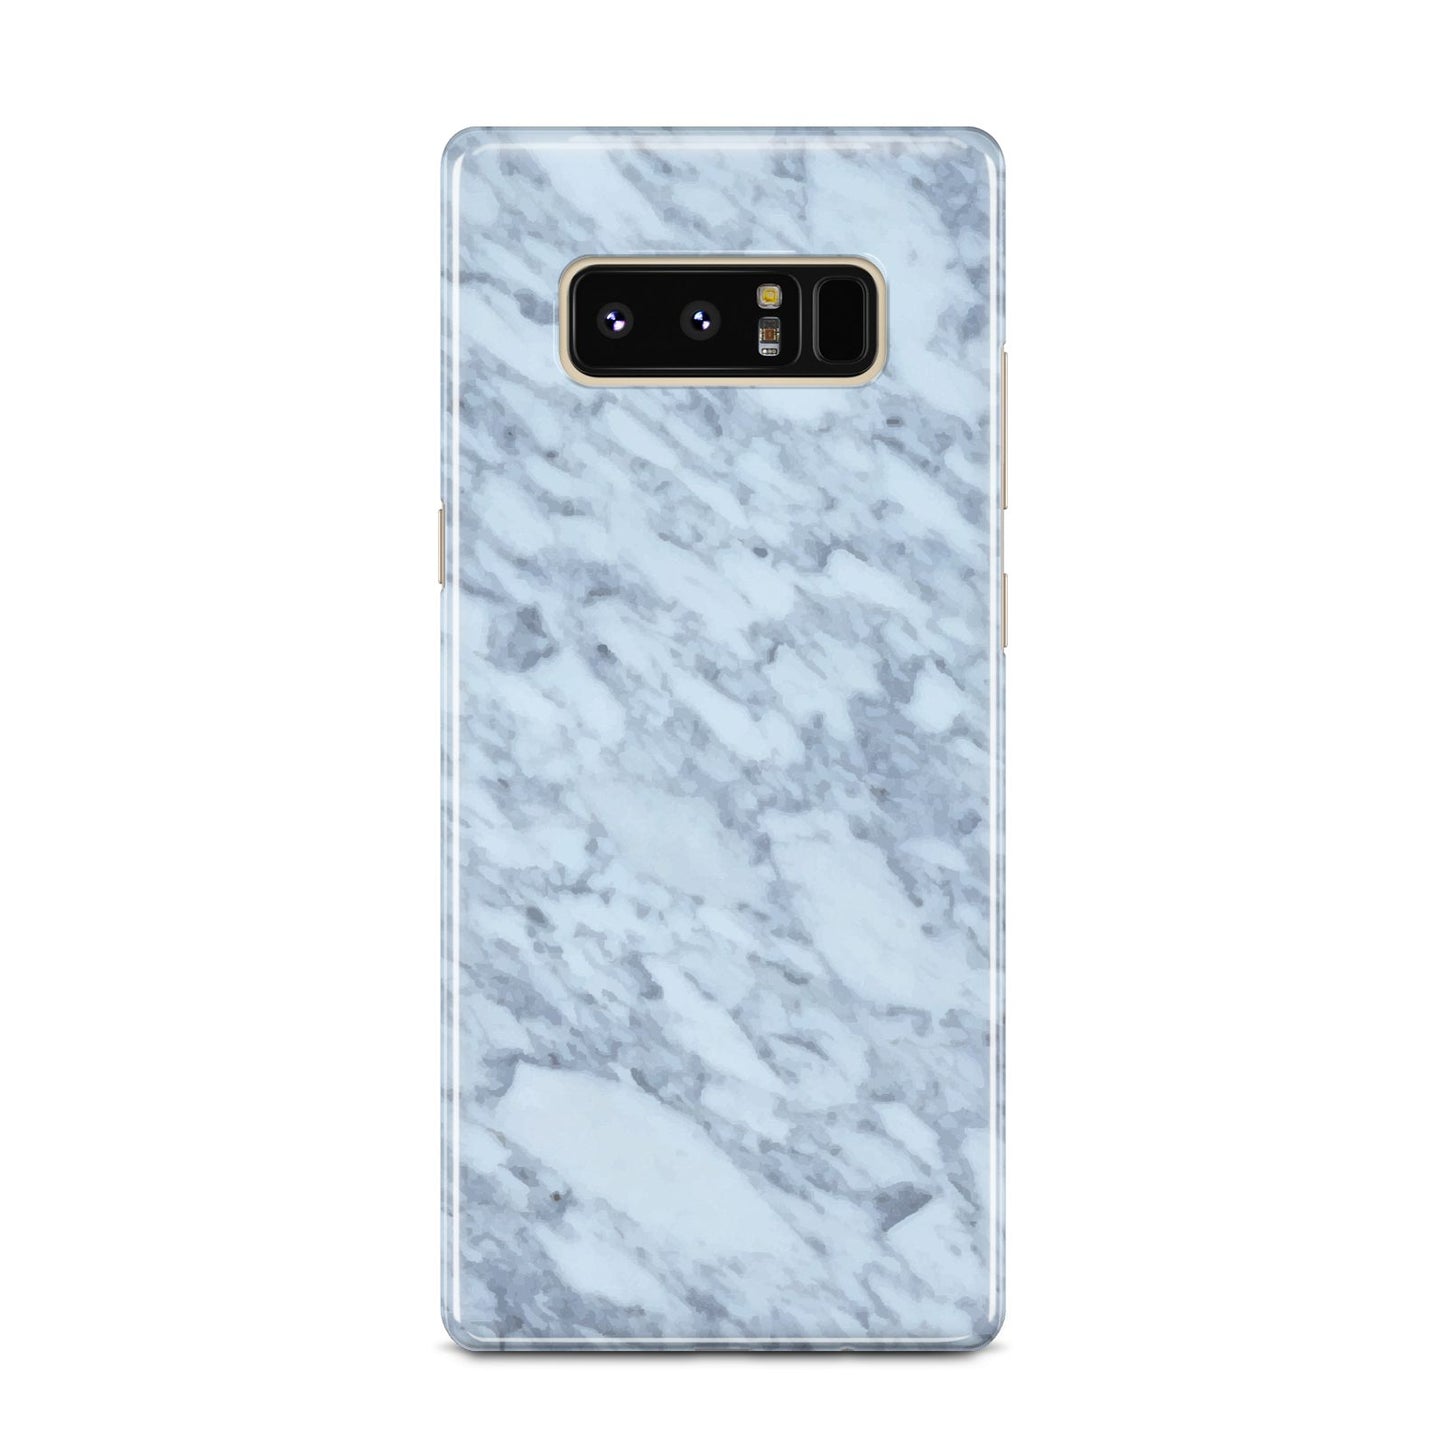 Faux Marble Grey 2 Samsung Galaxy Note 8 Case